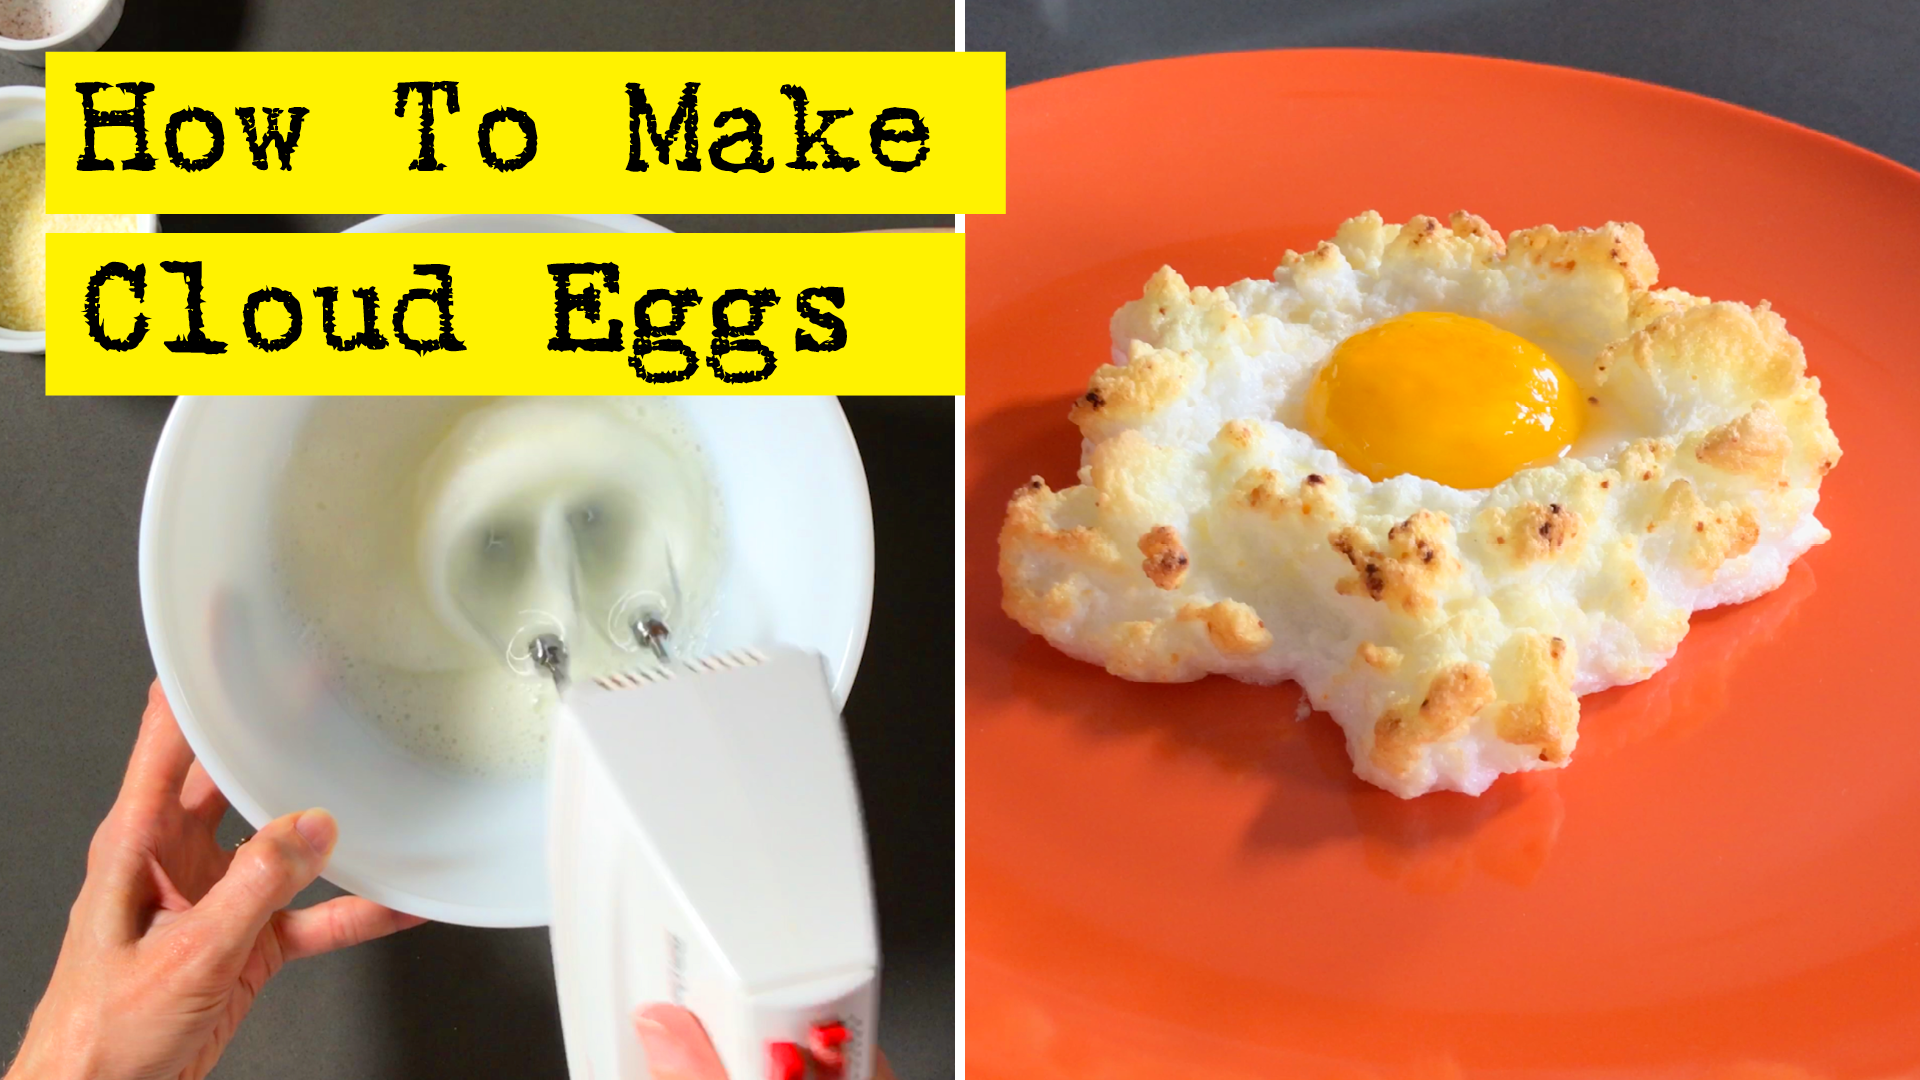 How To Make Cloud Eggs by DIY Presto!